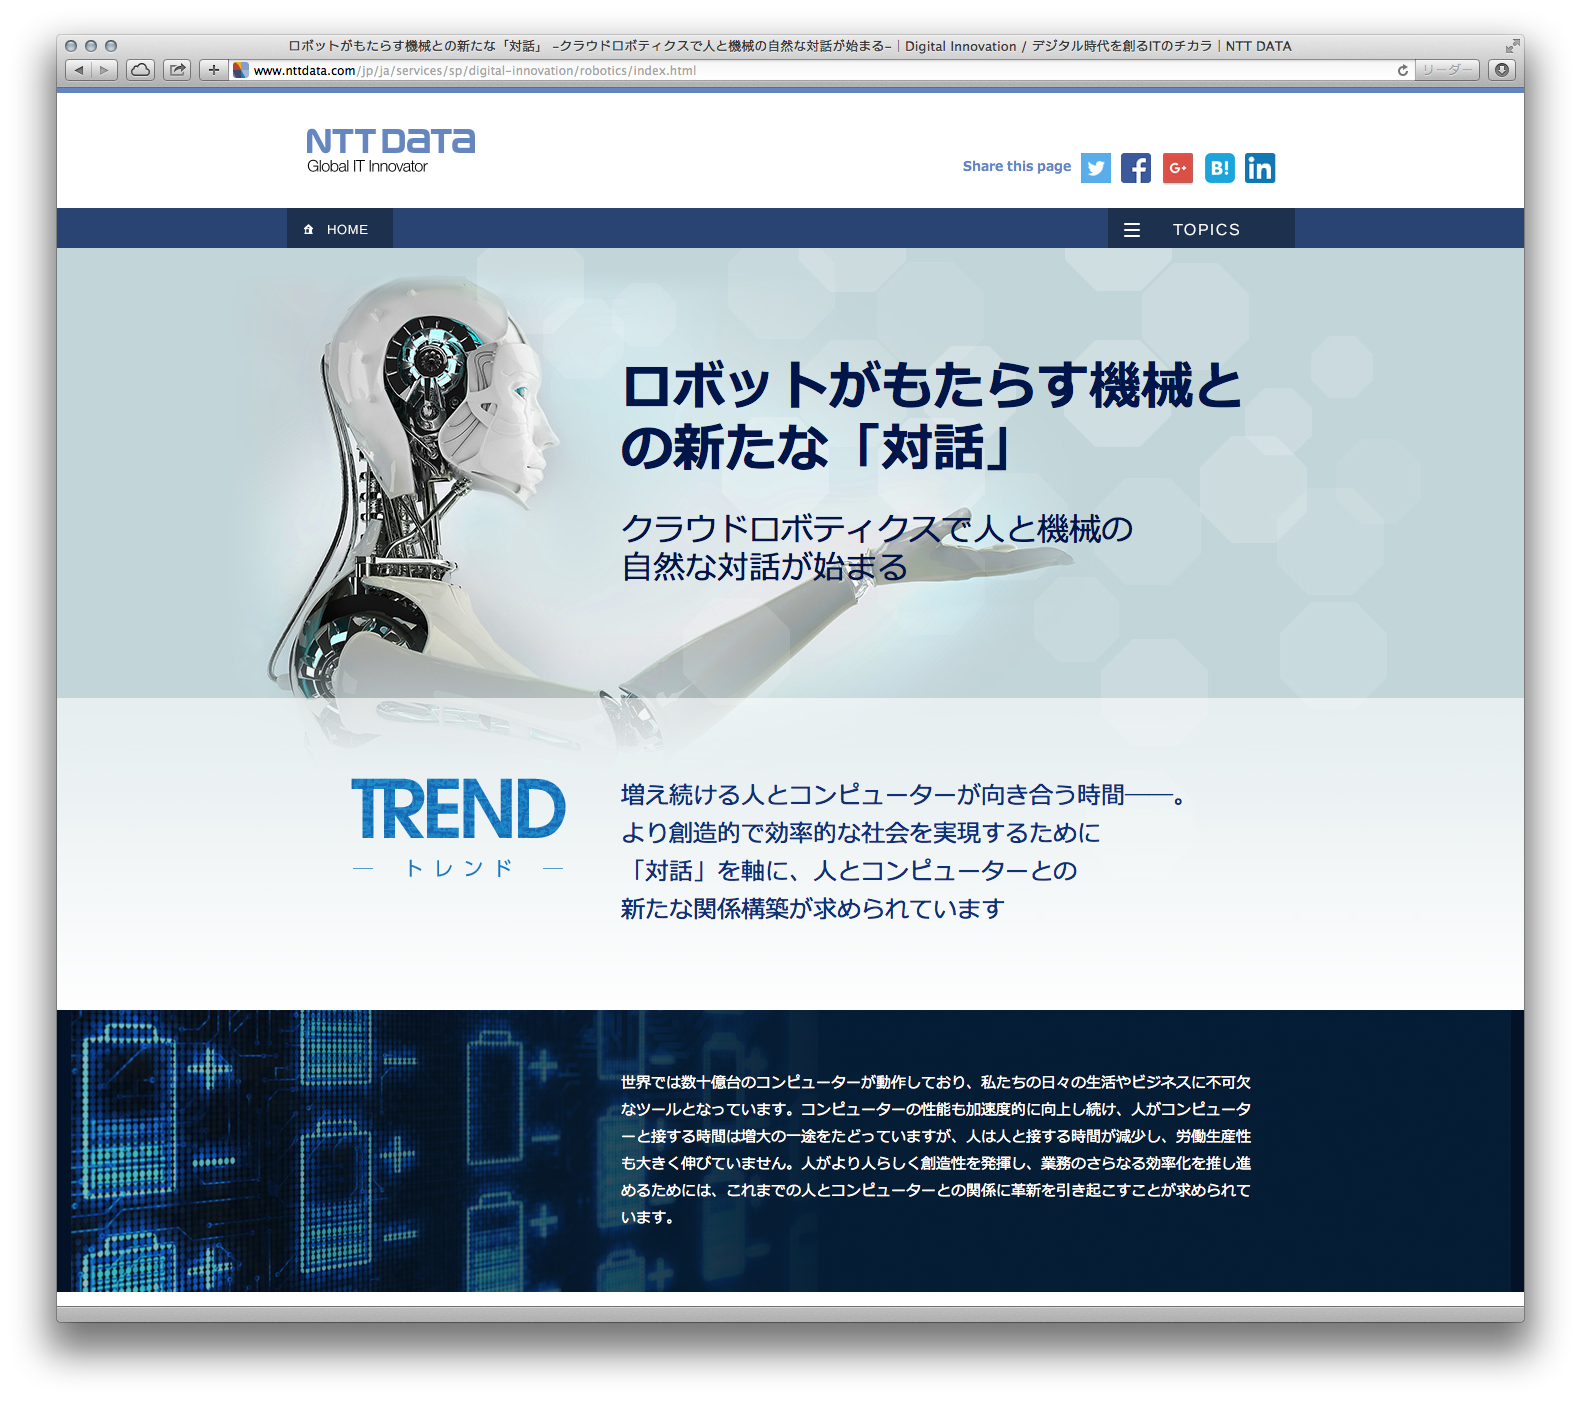 http://www.nttdata.com/jp/ja/services/sp/digital-innovation/robotics/index.html